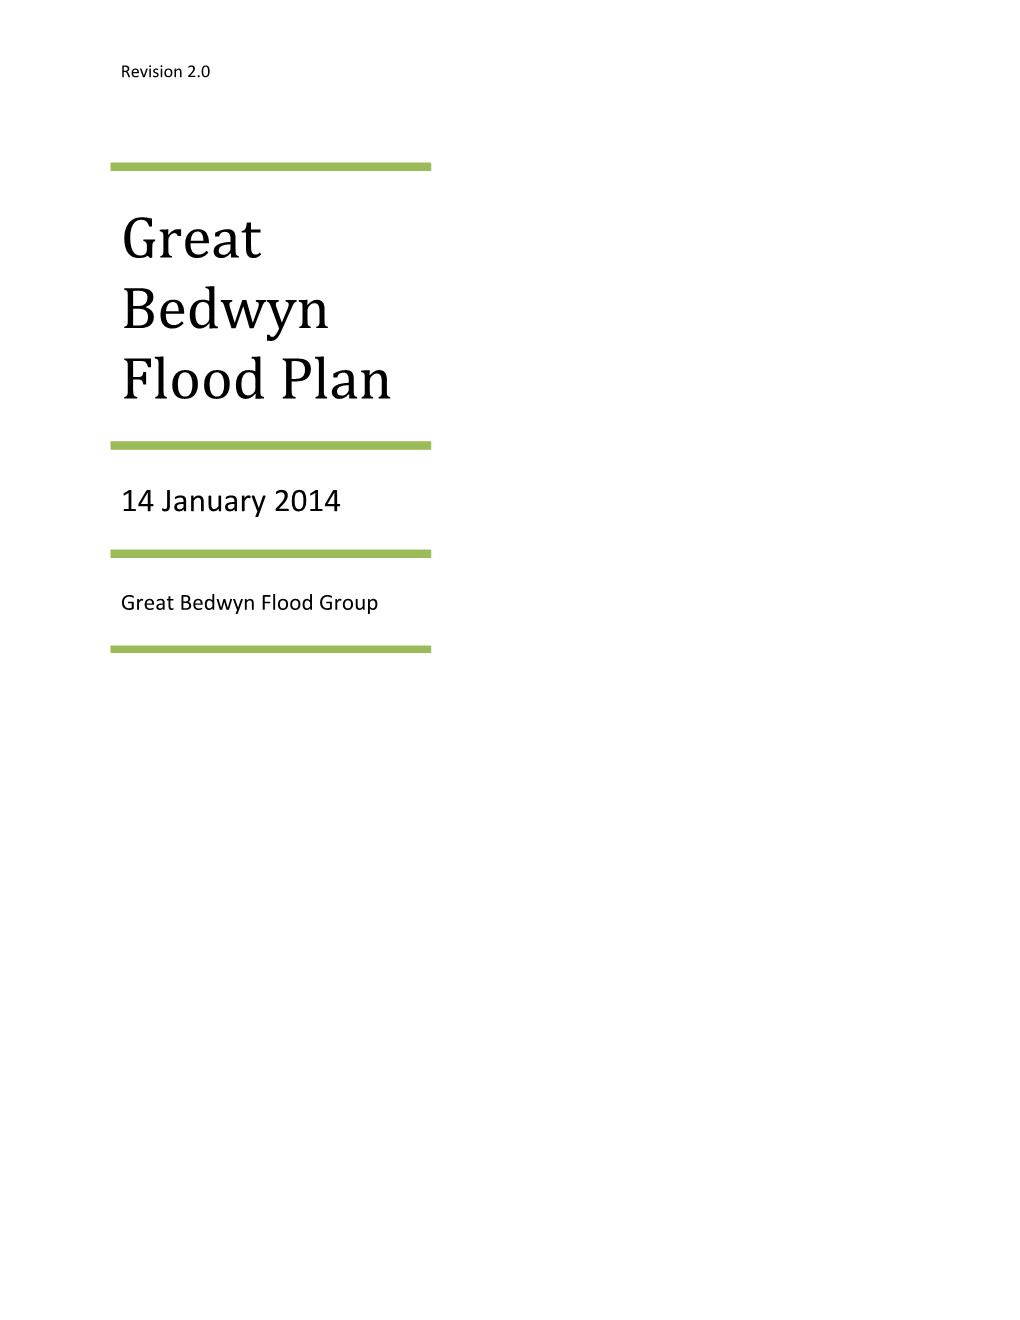 Great Bedwyn Flood Plan